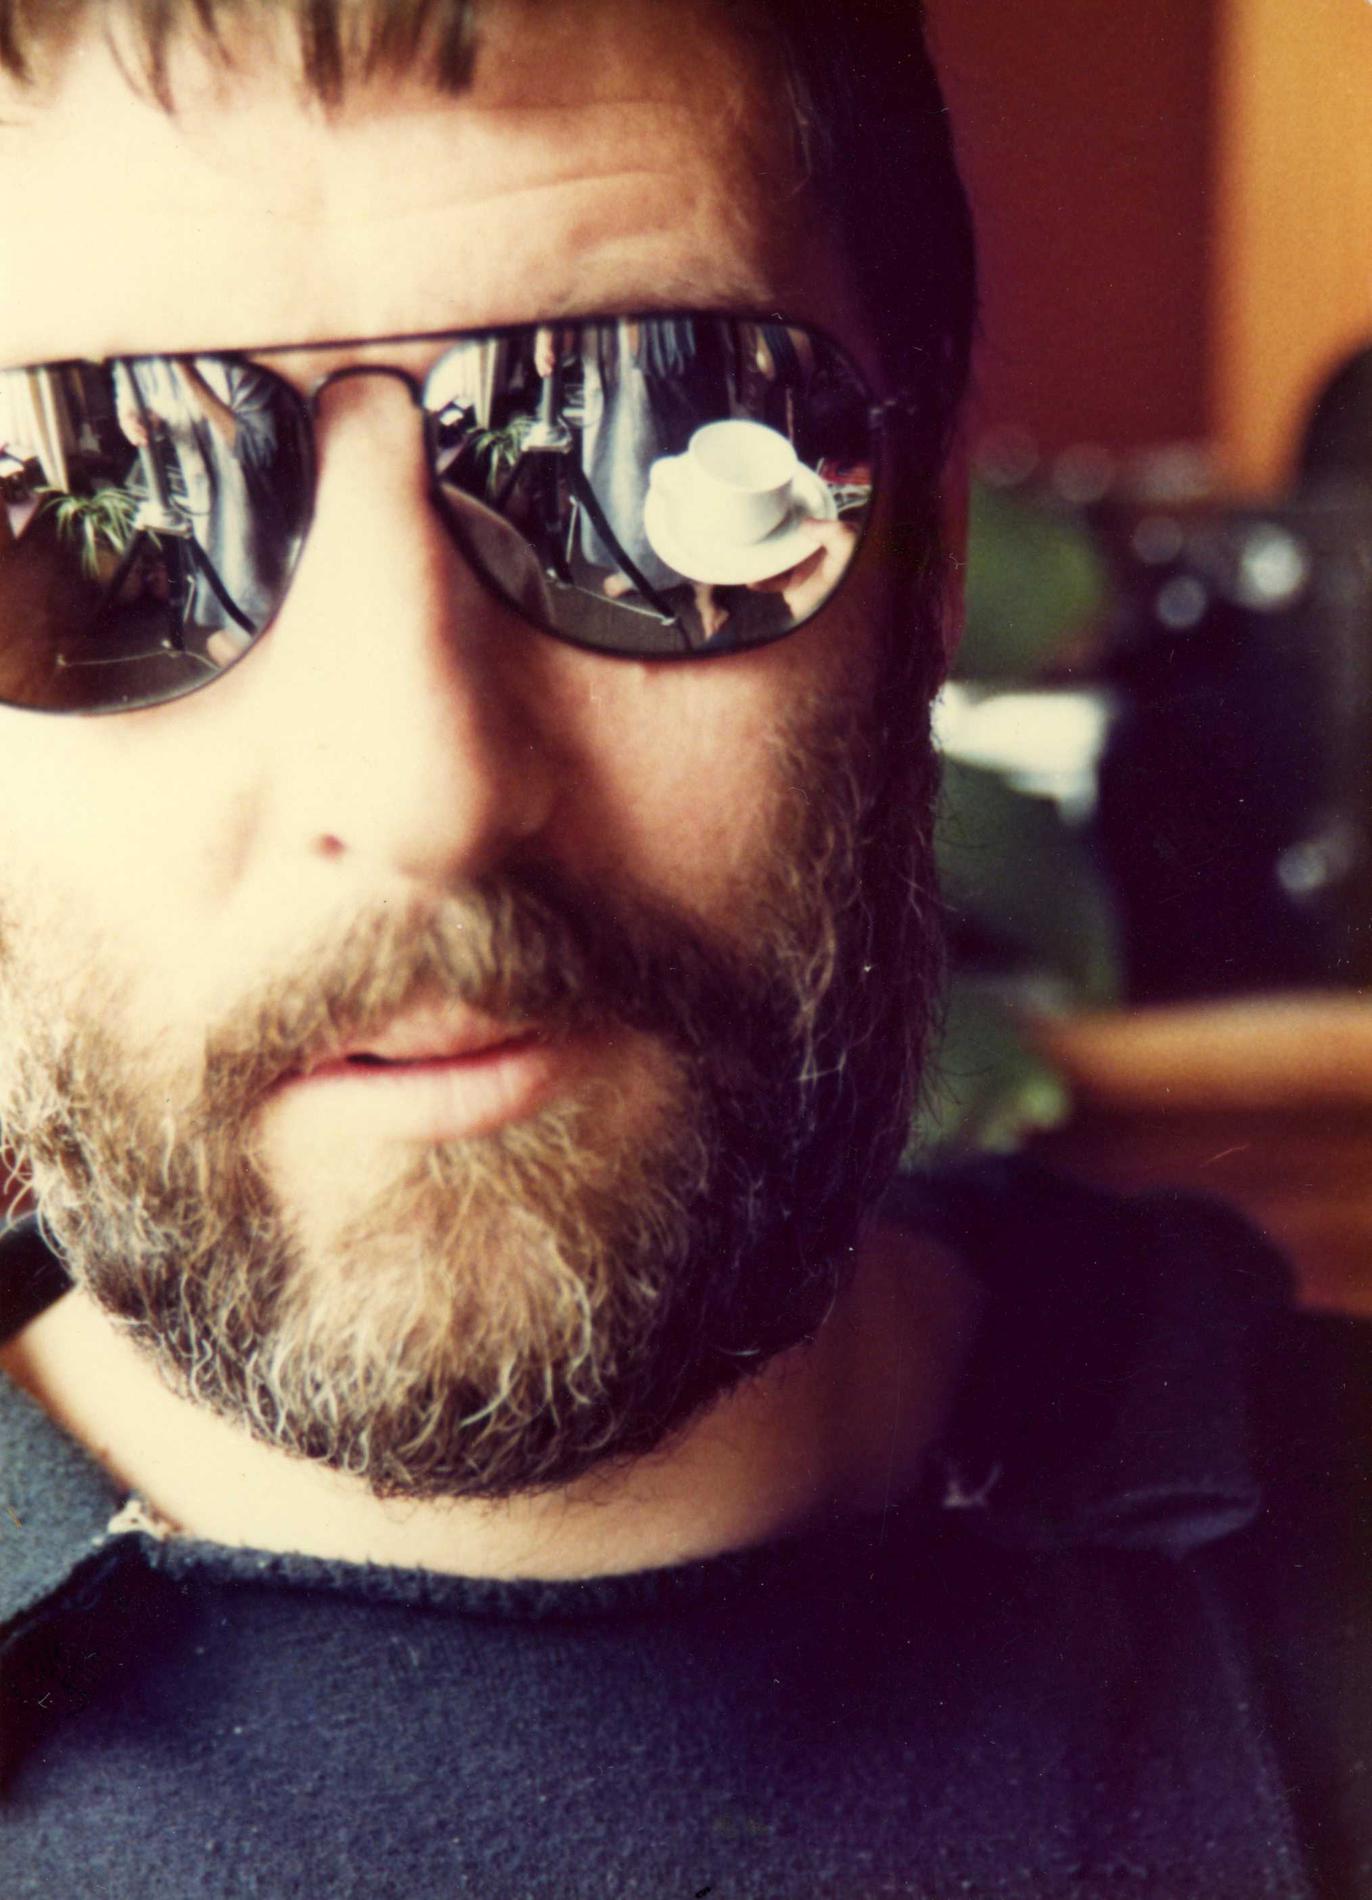 A man in reflective sunglasses